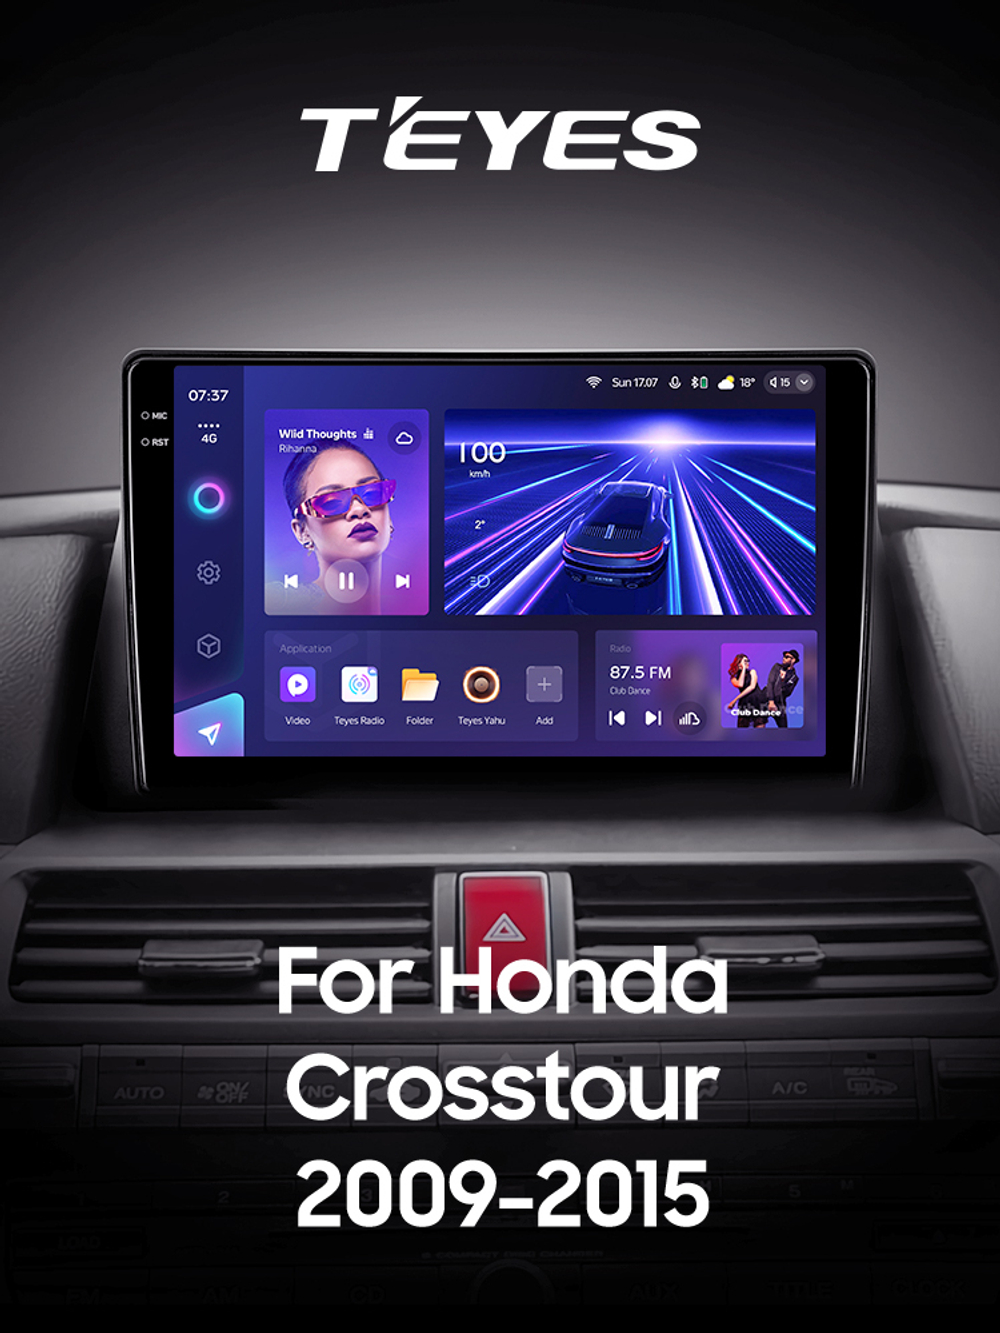 Teyes CC3 2K 9"для Honda Crosstour 1 2009-2015